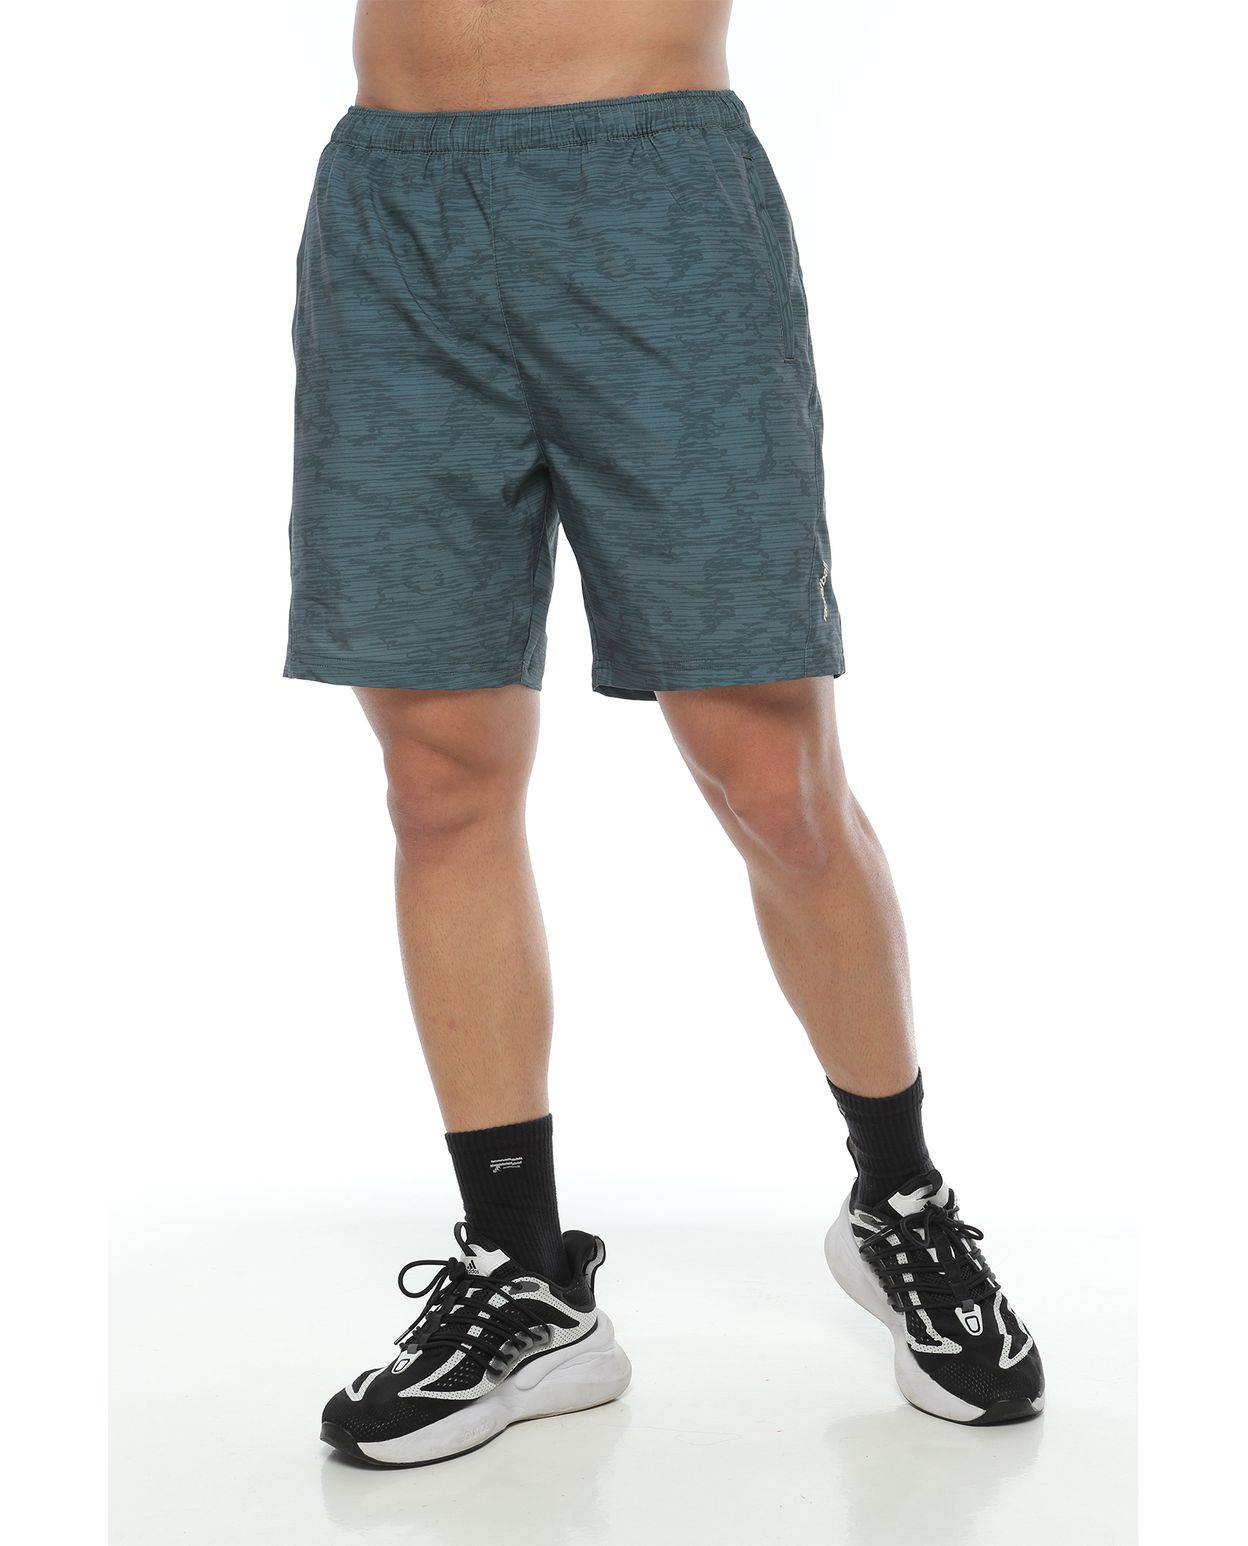 Pantaloneta deportiva hombre, color verde - racketball movil